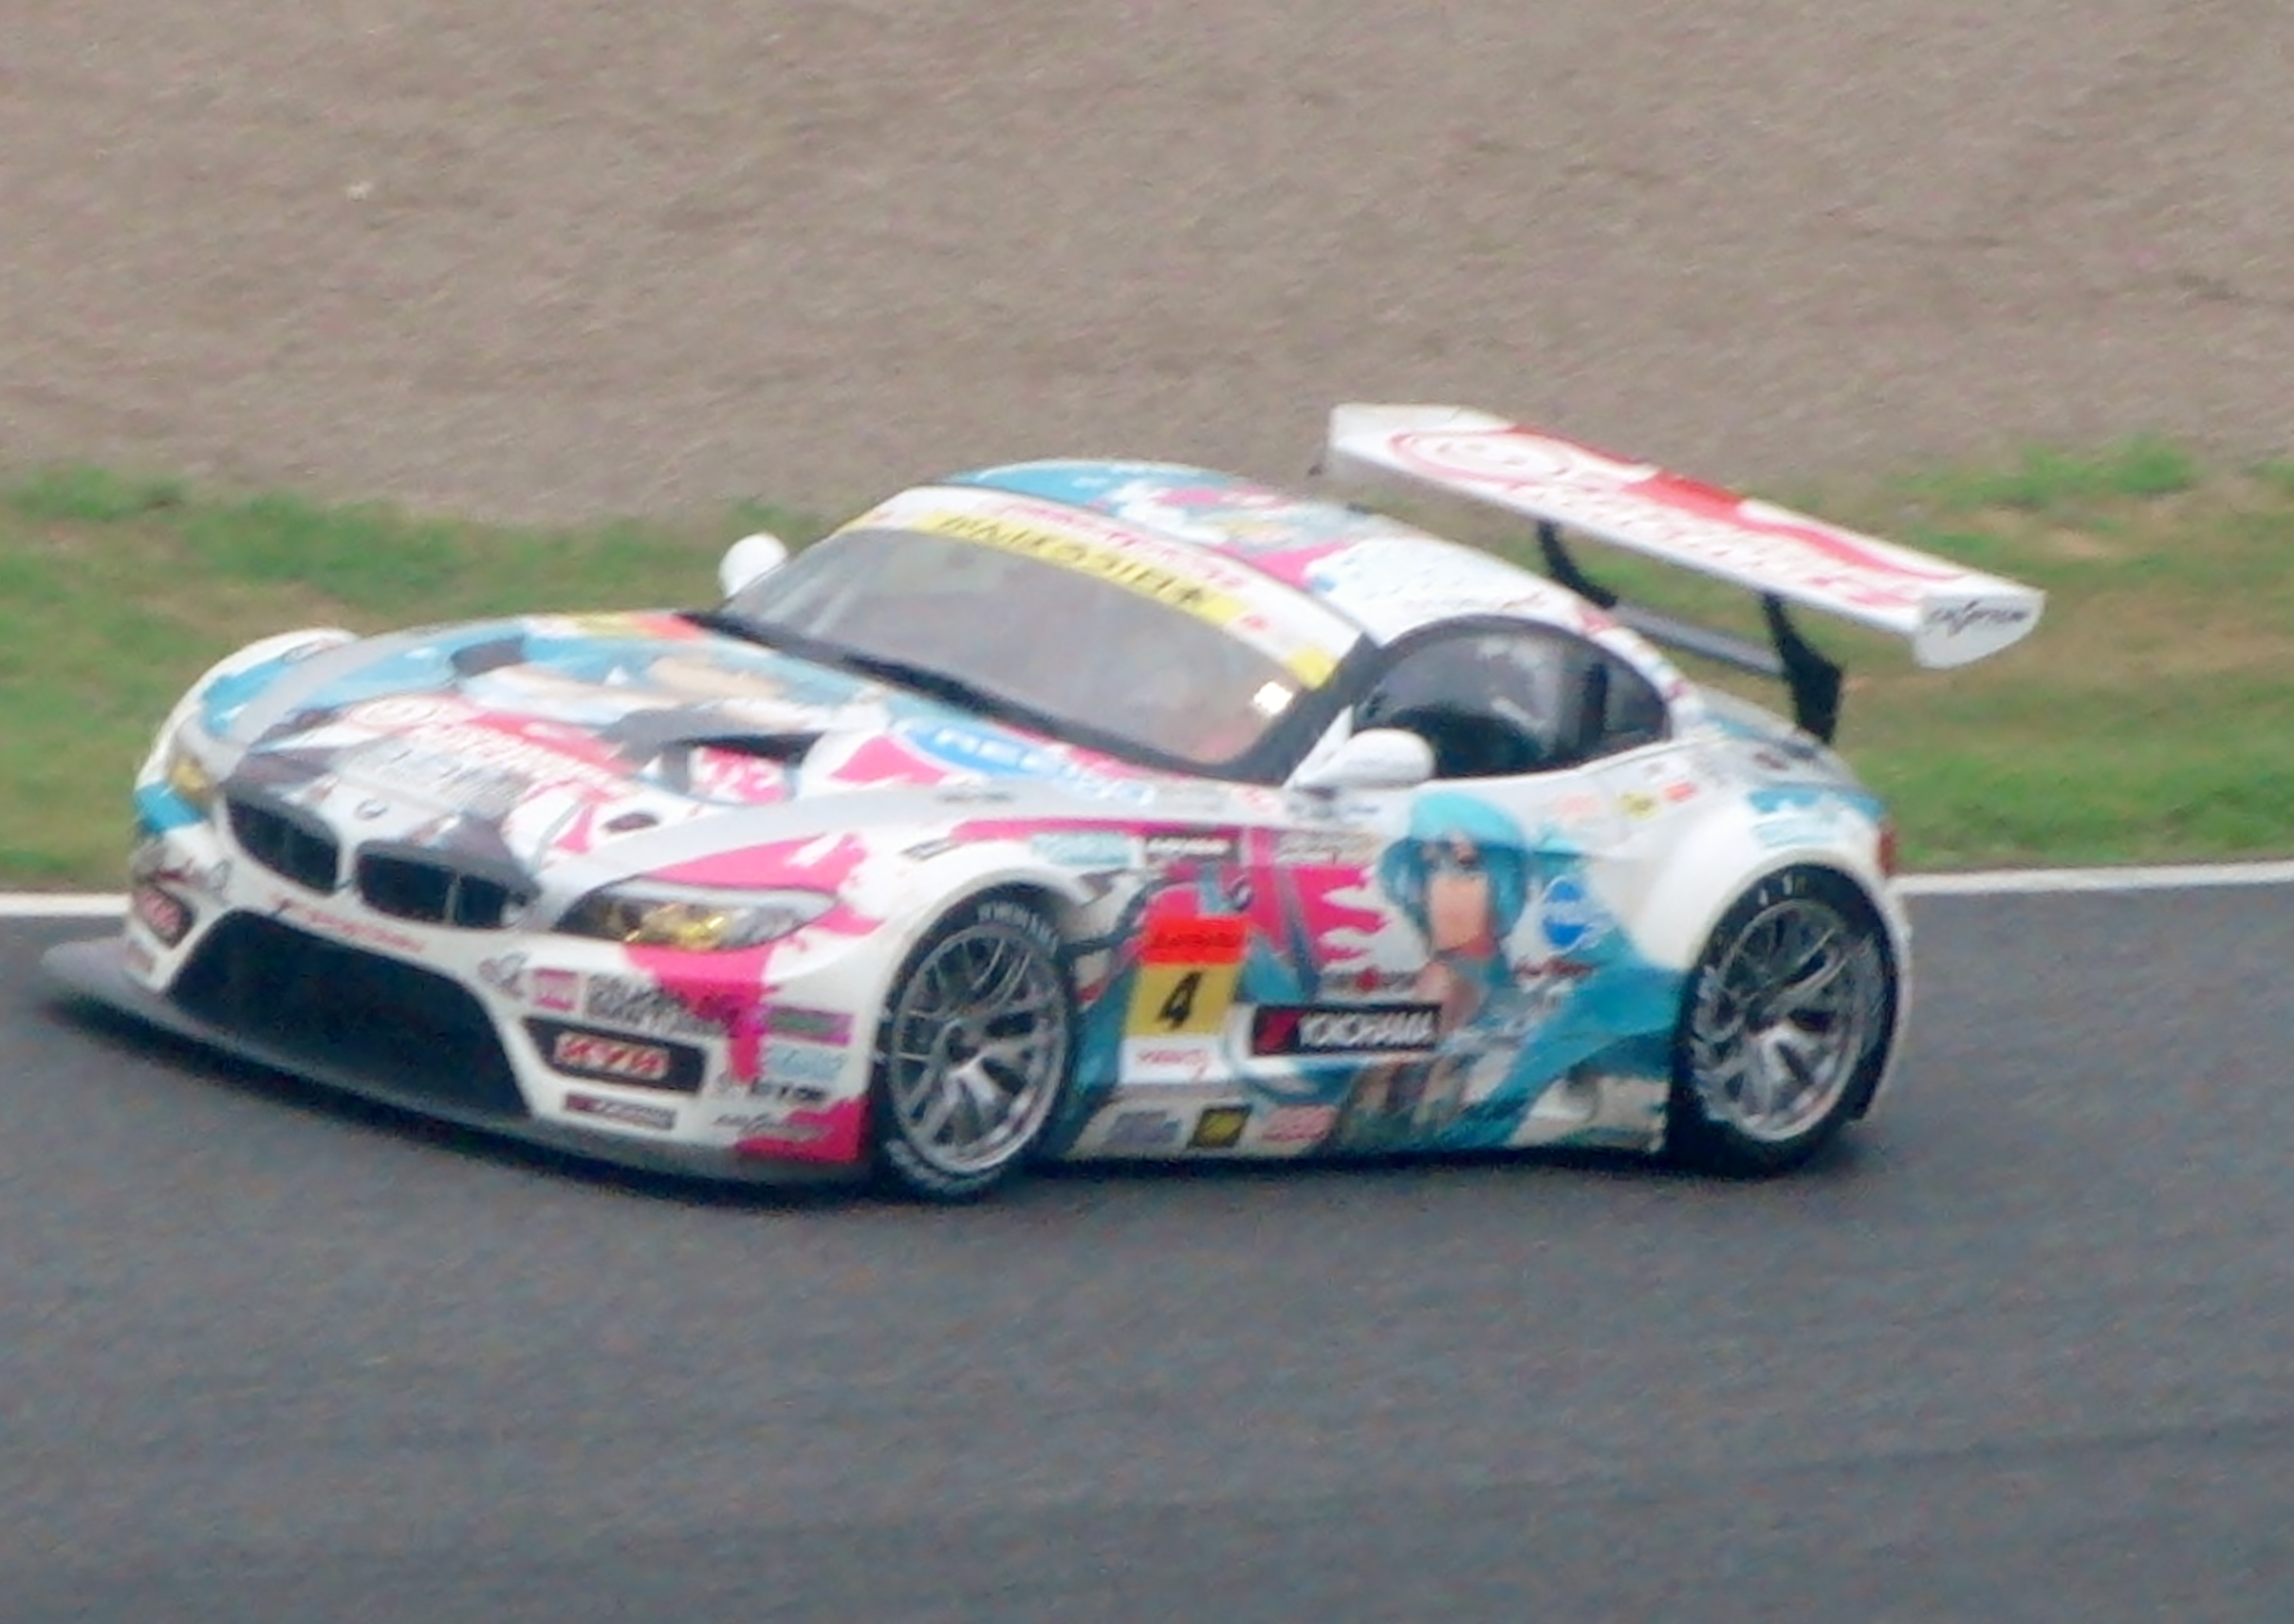 2011 Super GT Series - Wikipedia